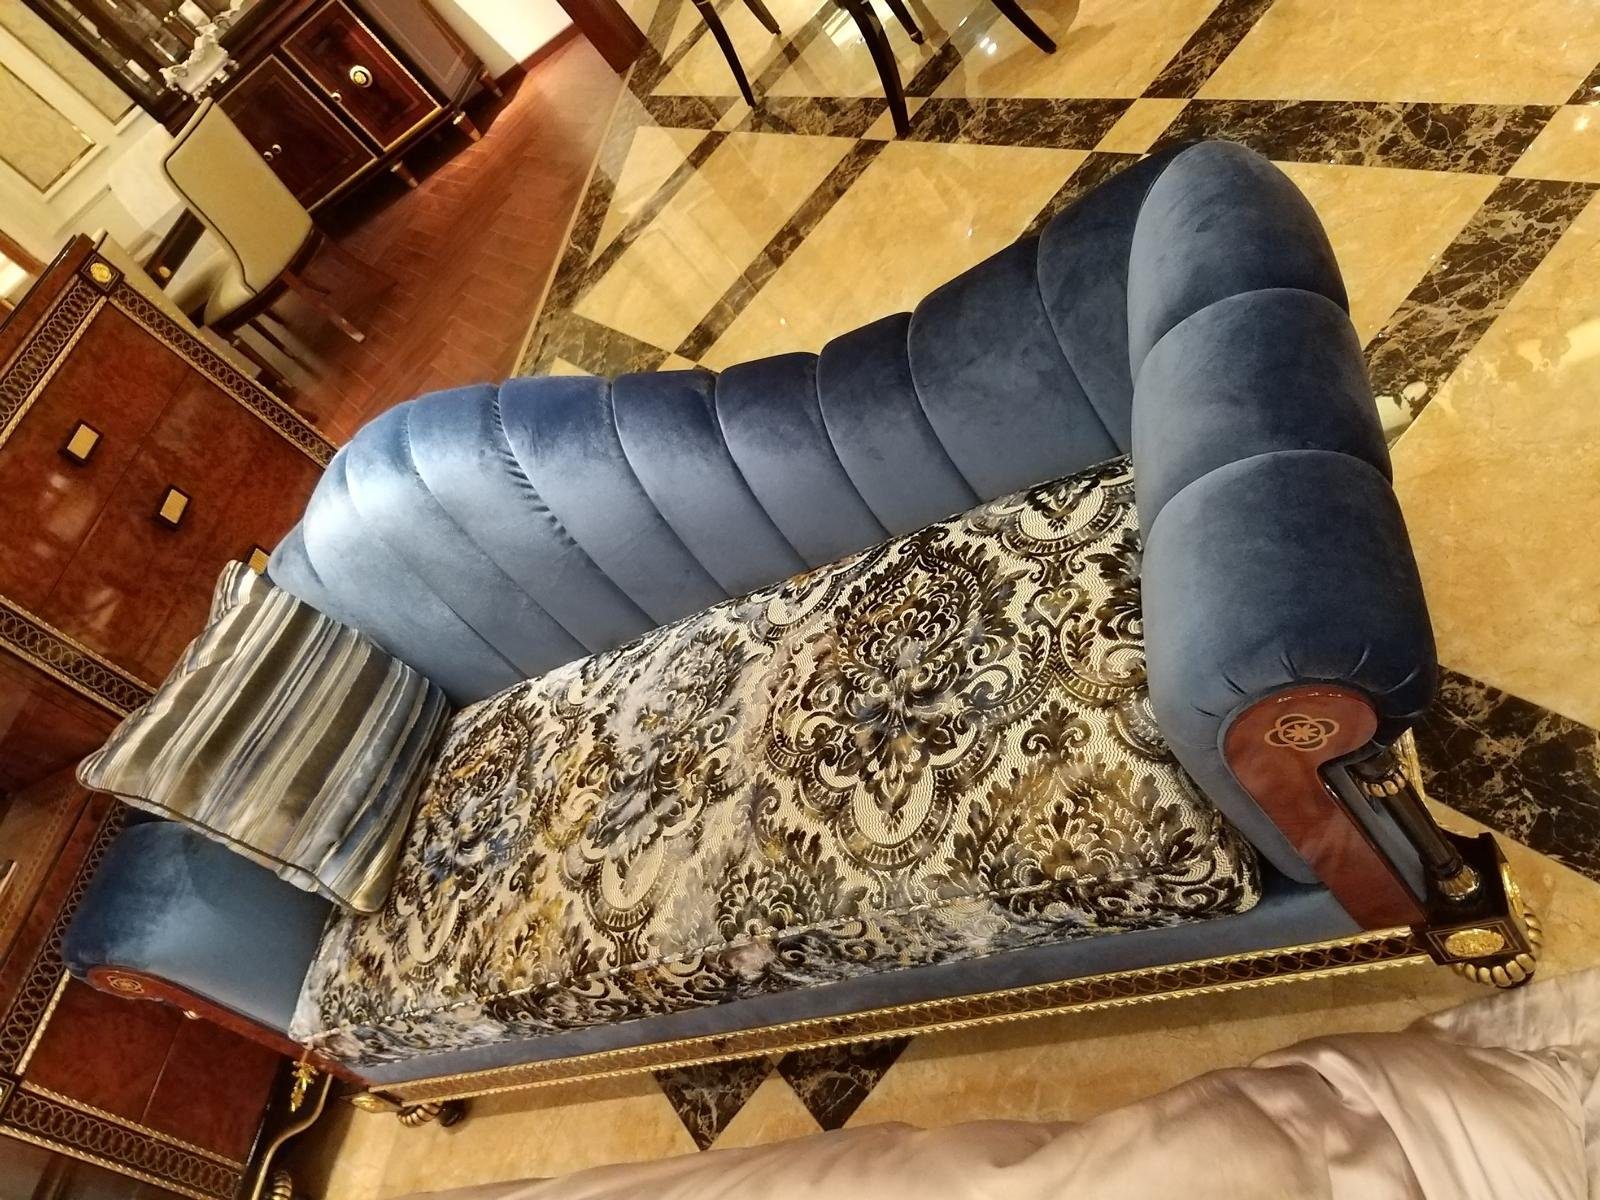 JVmoebel Chaiselongue Blauer Chaiselounge Antik Stil Sofa Liege Textil Barock Rokoko, Made in Europe | Chaiselongues